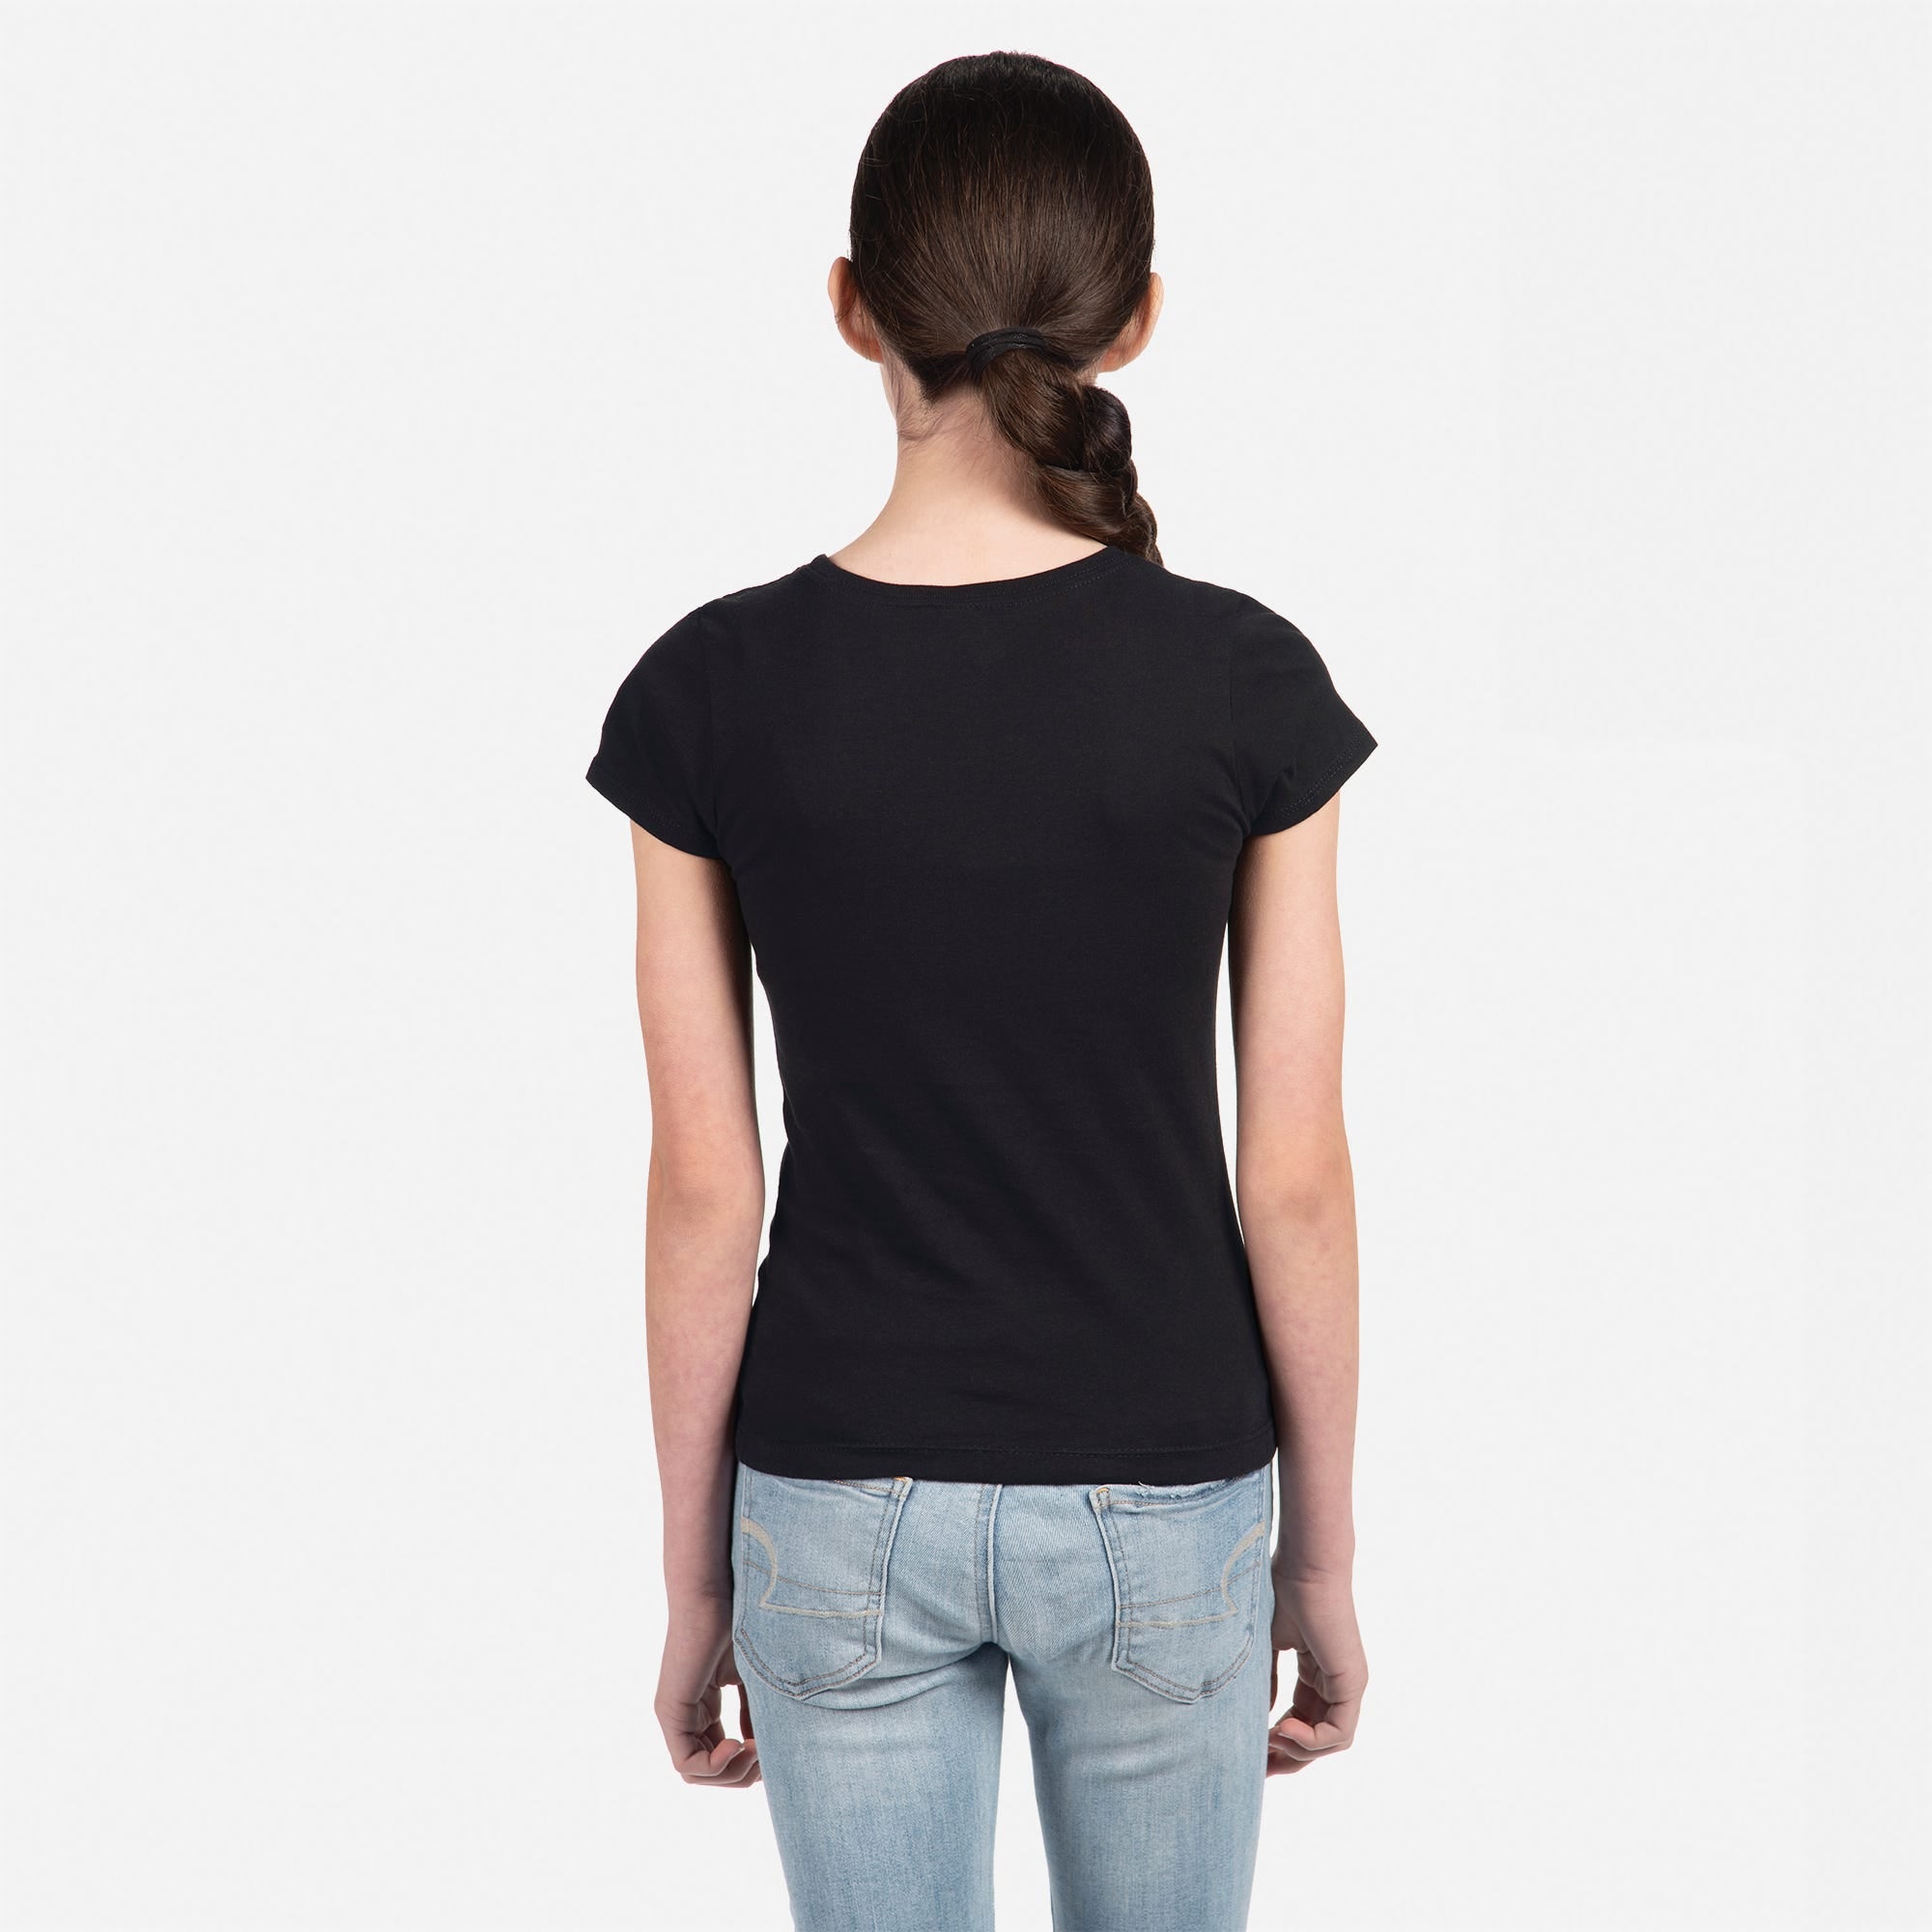 Cotton Princess T-Shirt Black 3710 Next Level Apparel Back View